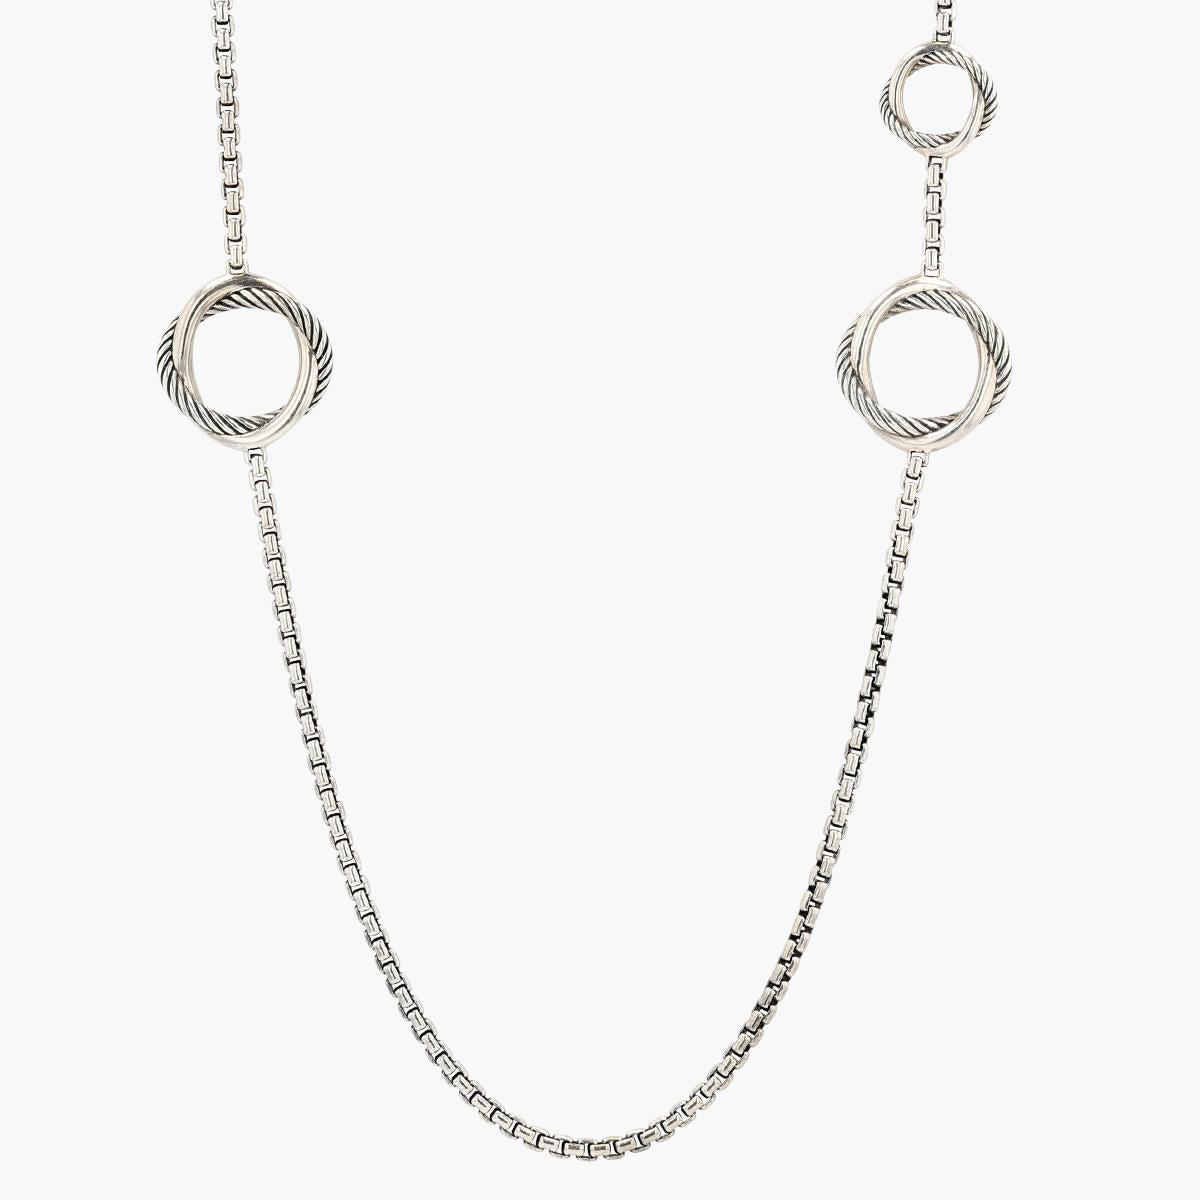 Vintage David Yurman Infinity Necklace